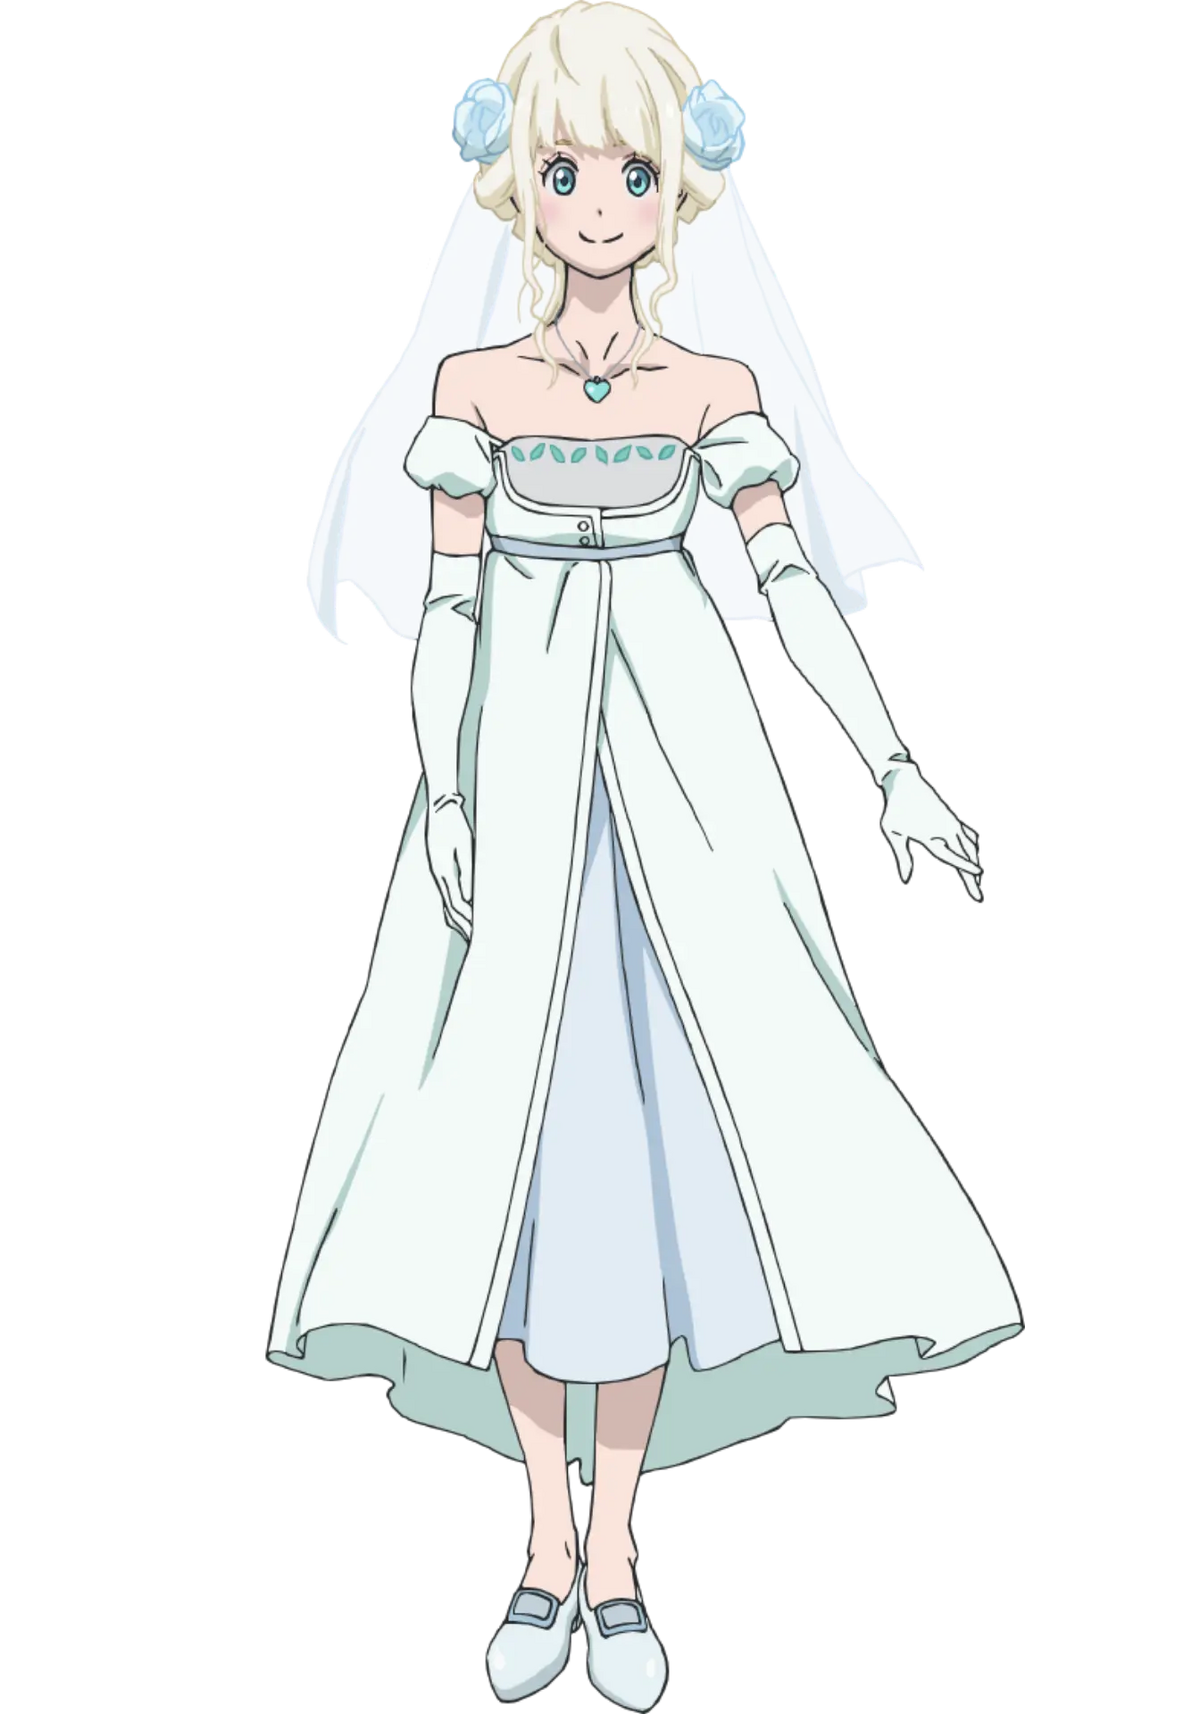 Fena: Pirate Princess (Kaizoku Oujo)